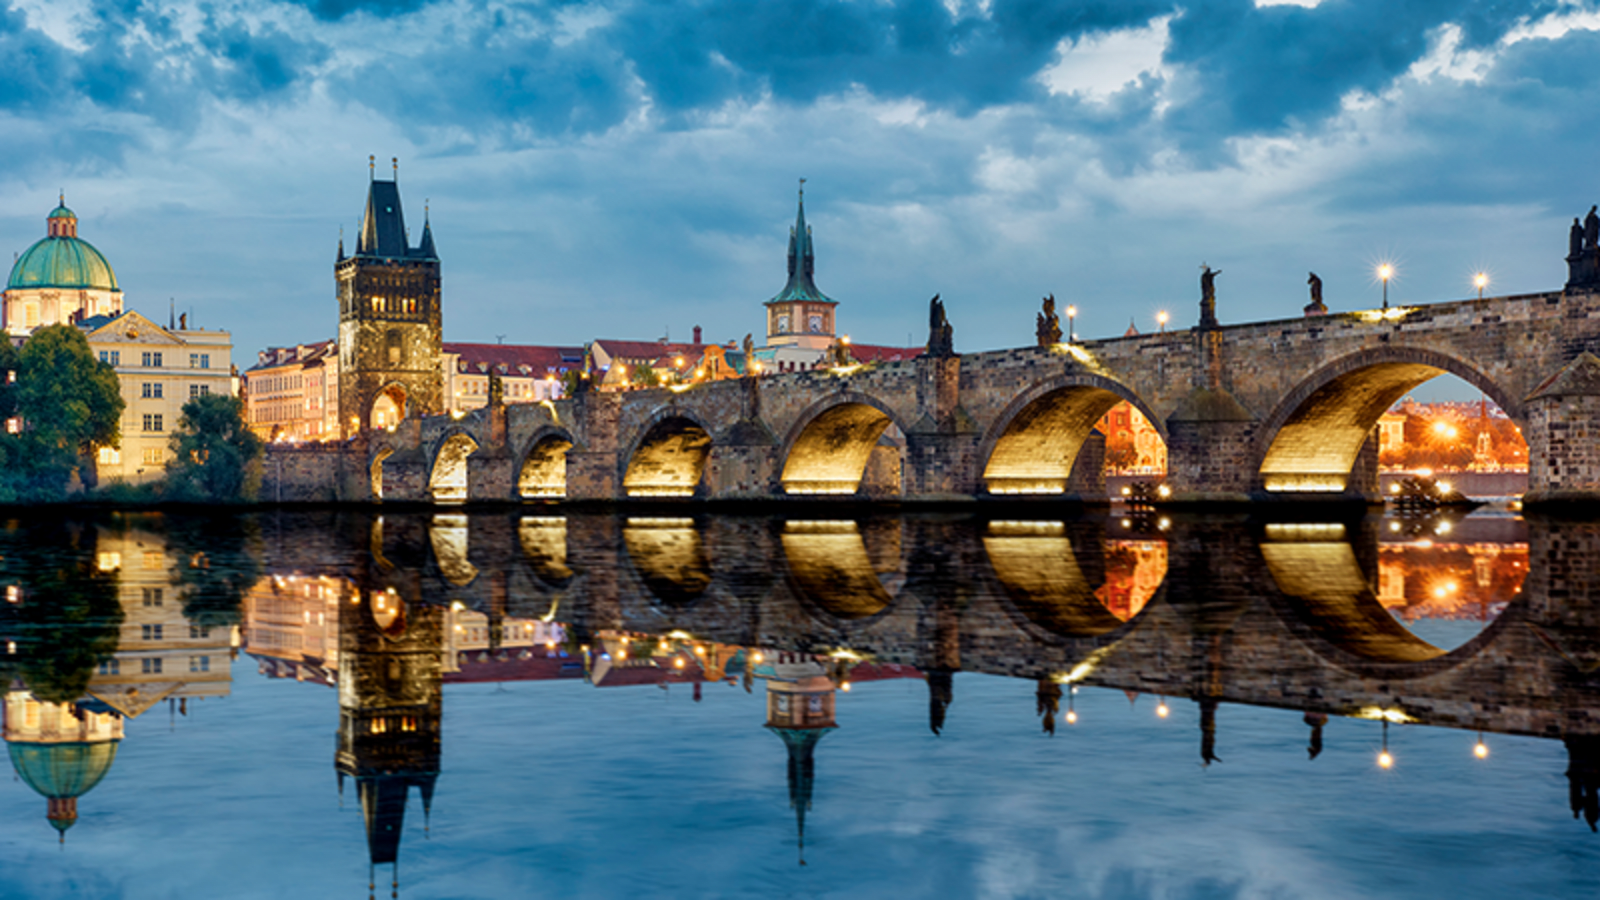 Beautifully lit bridge over a river in Prague